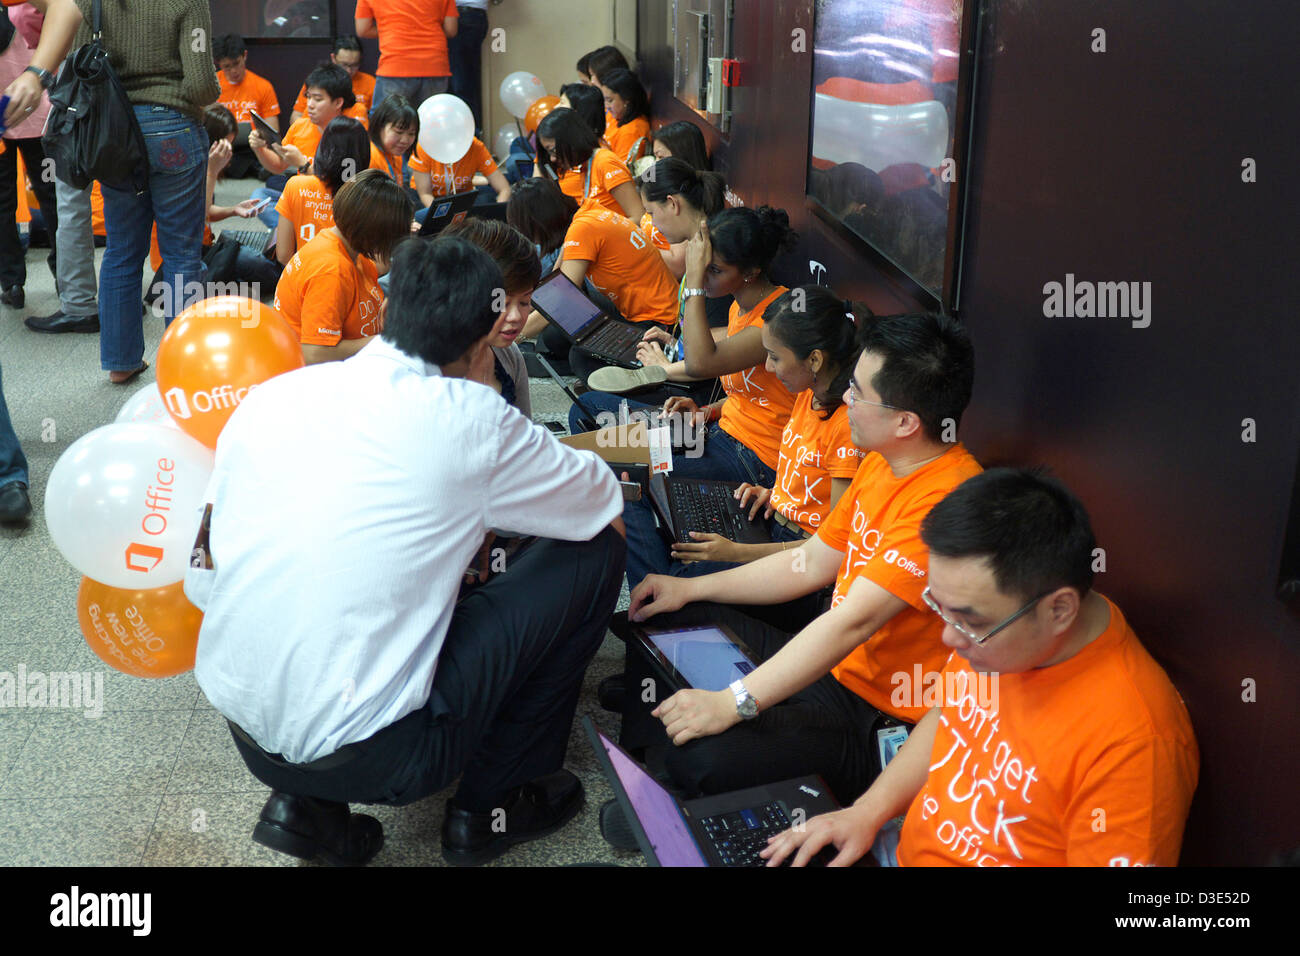 Microsoft Office Party in KLCC LRT station in Kuala Lumpur Stock Photo ...